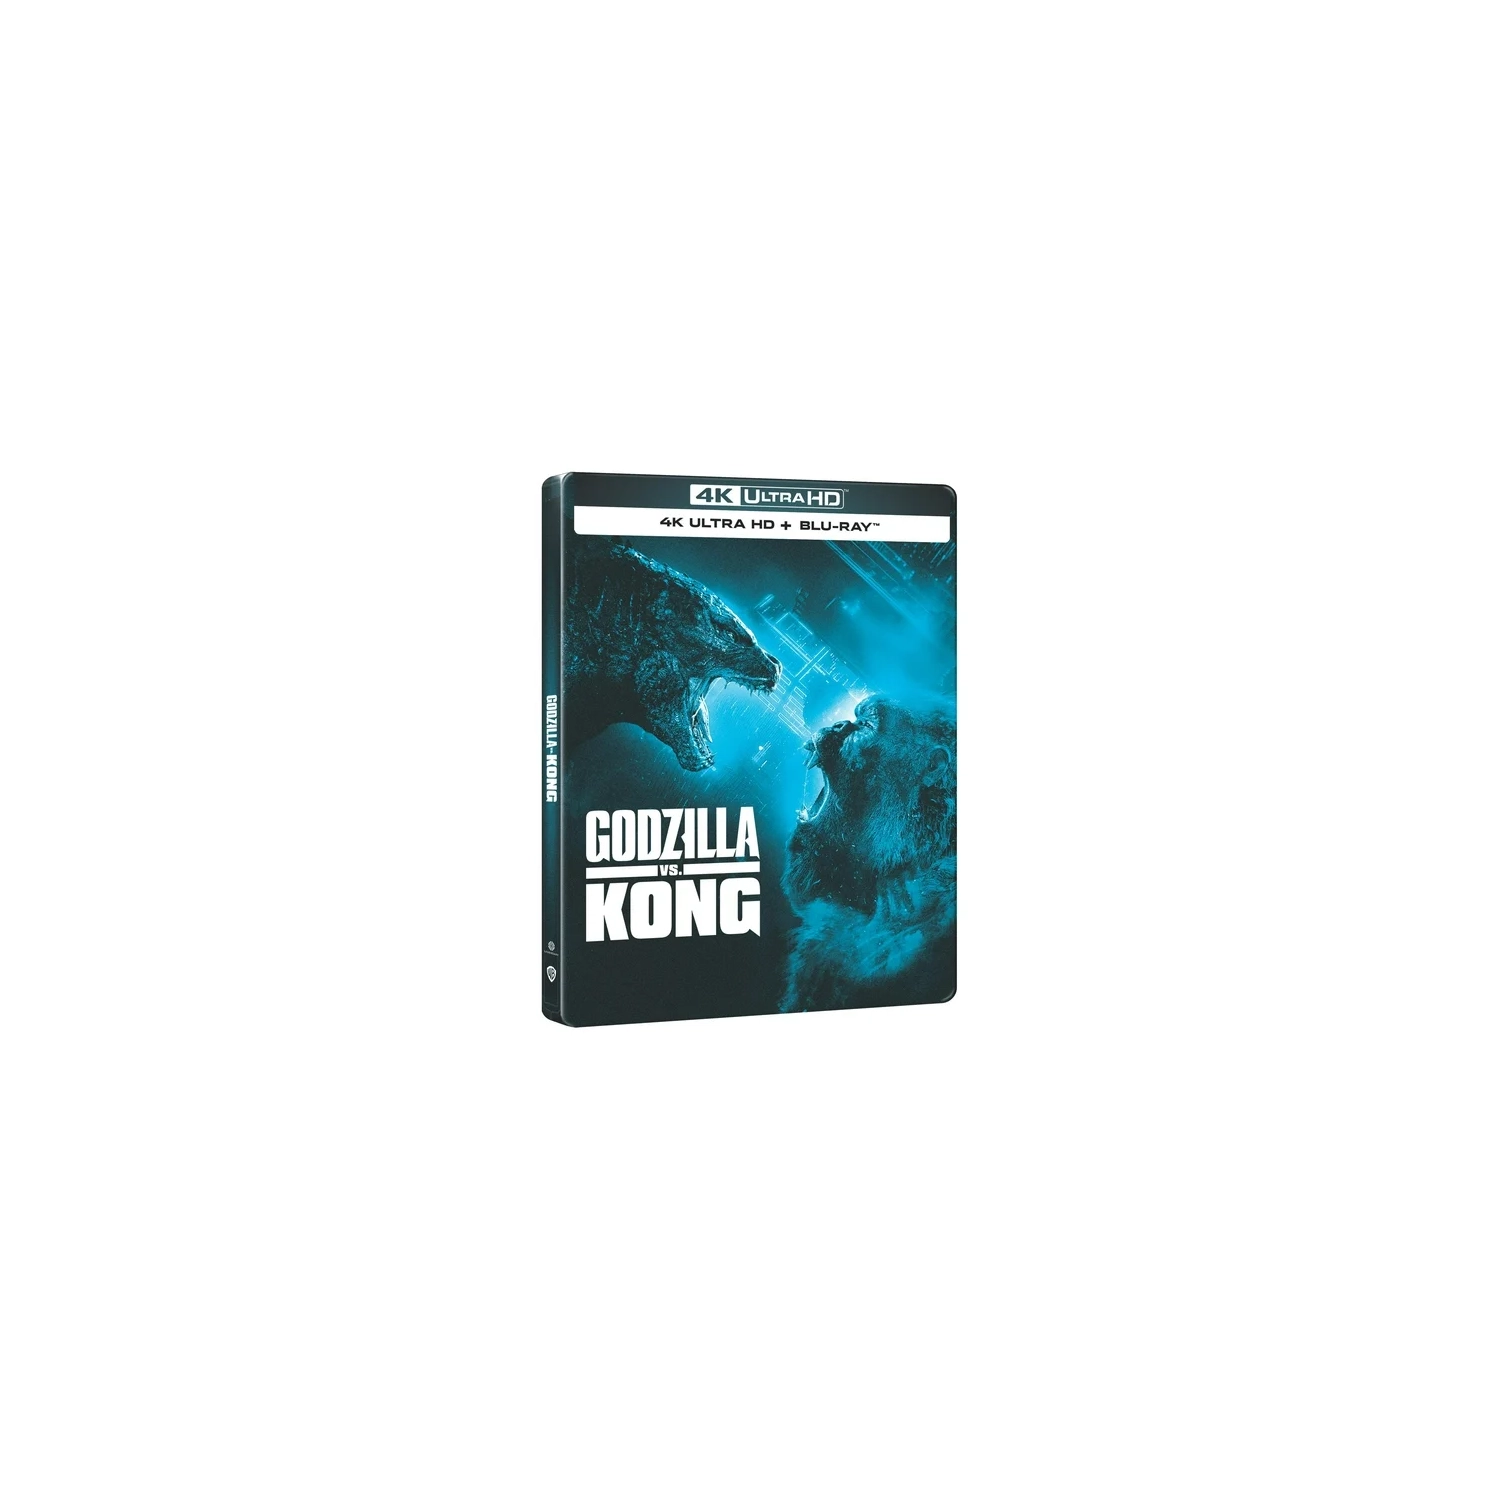 Godzilla vs. Kong [Steelbook] [4K Ultra HD + Blu-ray]